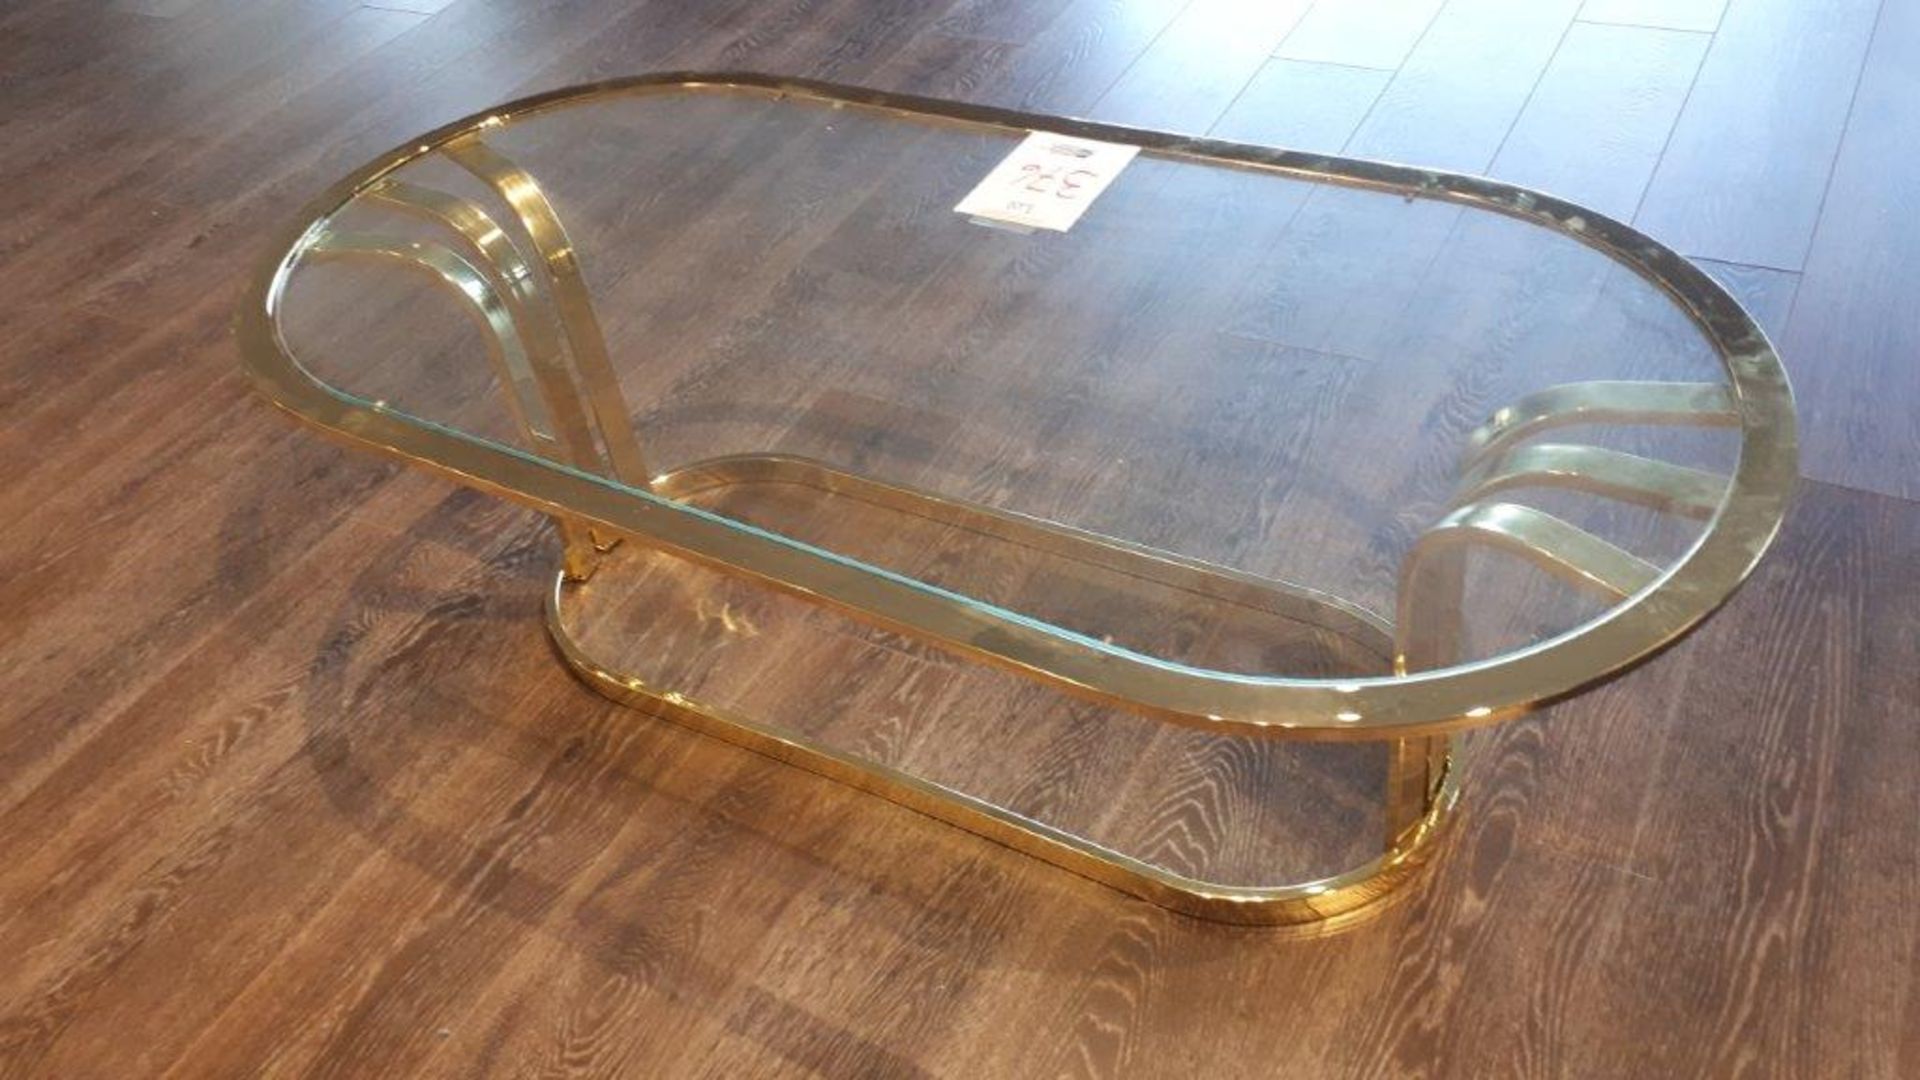 Metal base coffee table w/glass top, 50”x24”x16” - Image 2 of 2